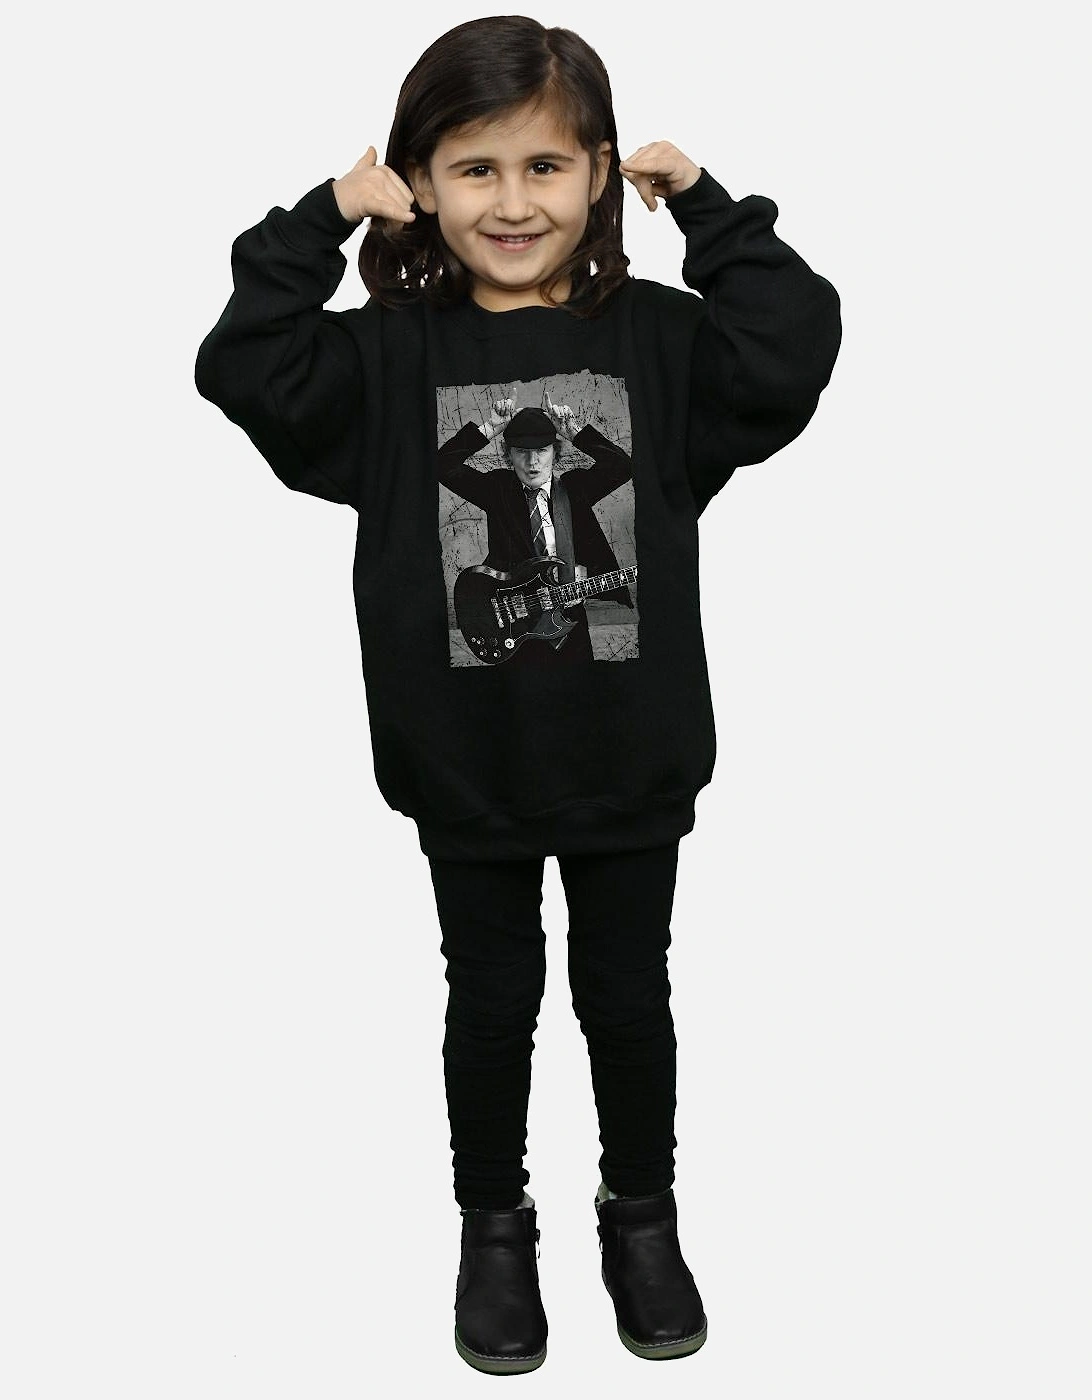 Girls Angus Young Distressed Photo Sweatshirt